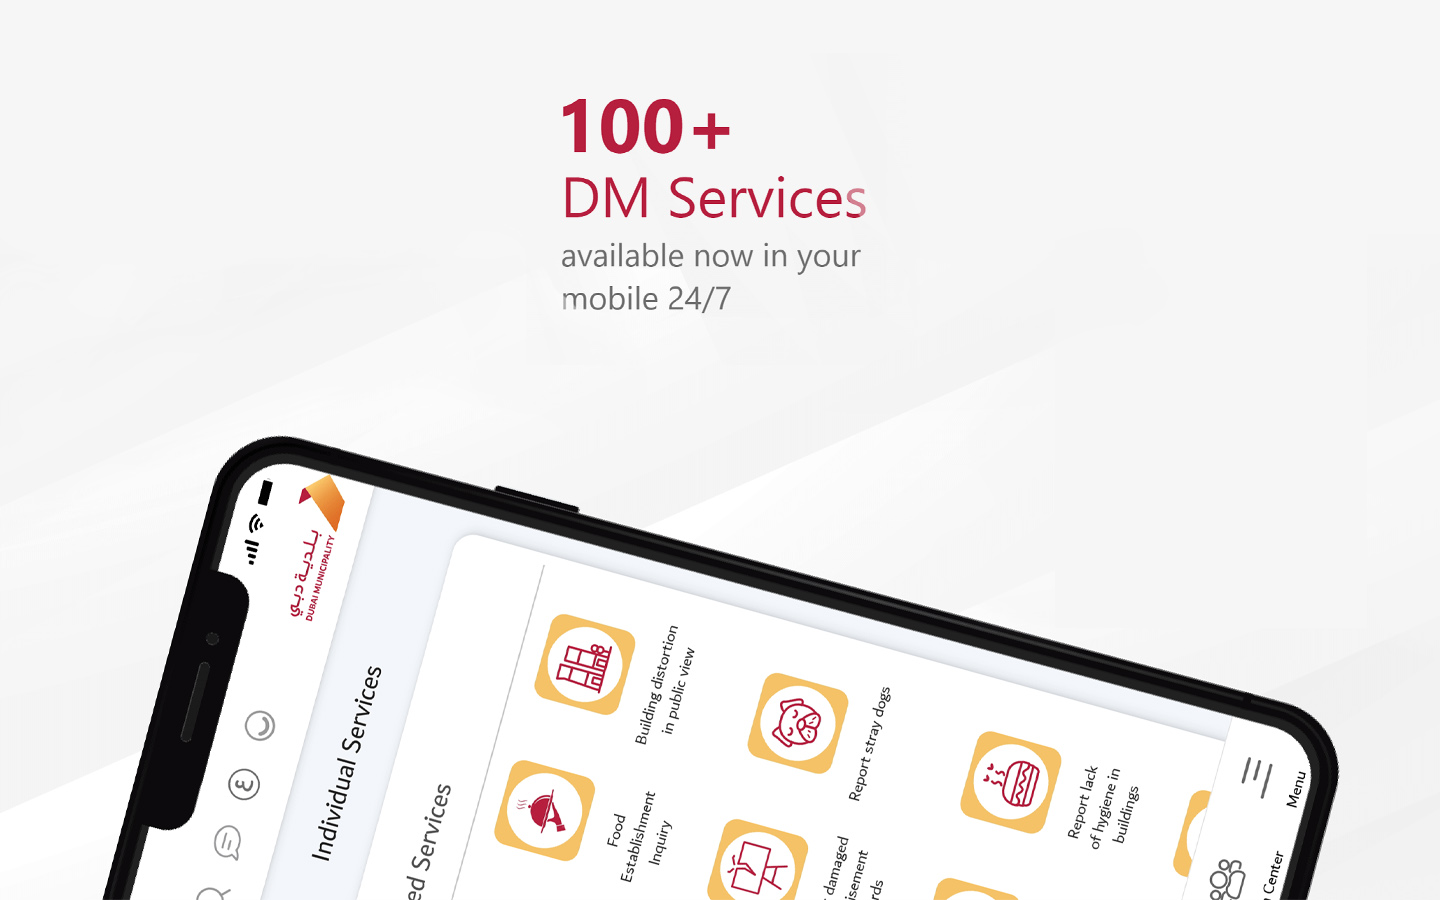 Dubai Municipality Mobile App provides digital information about Dubai